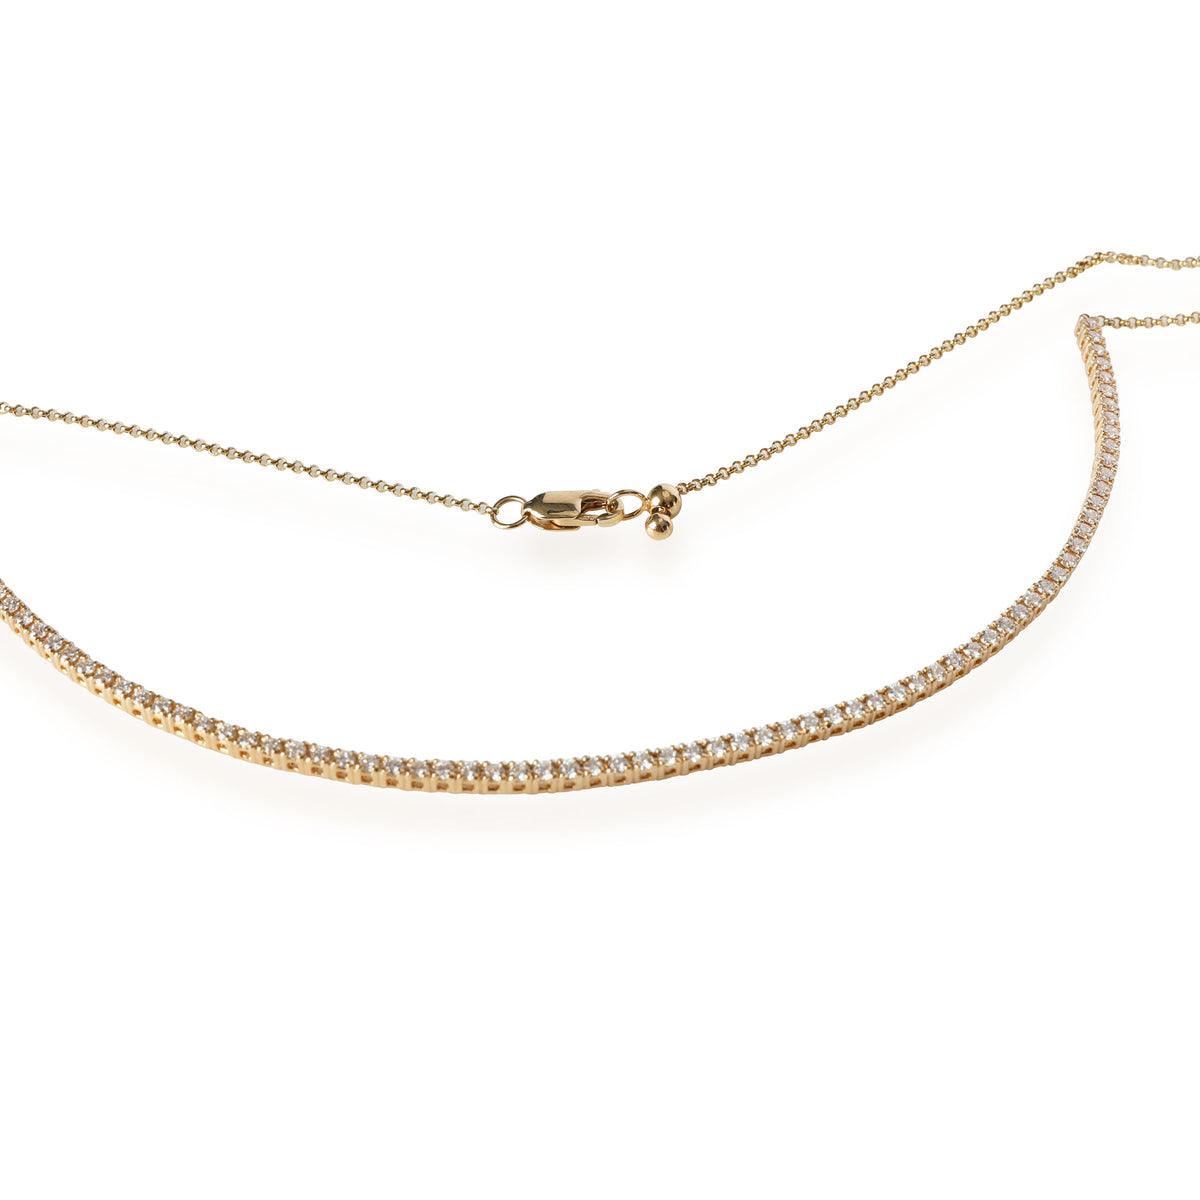 Diamond Pixie Necklace in 14K Yellow Gold 1.27 ctw